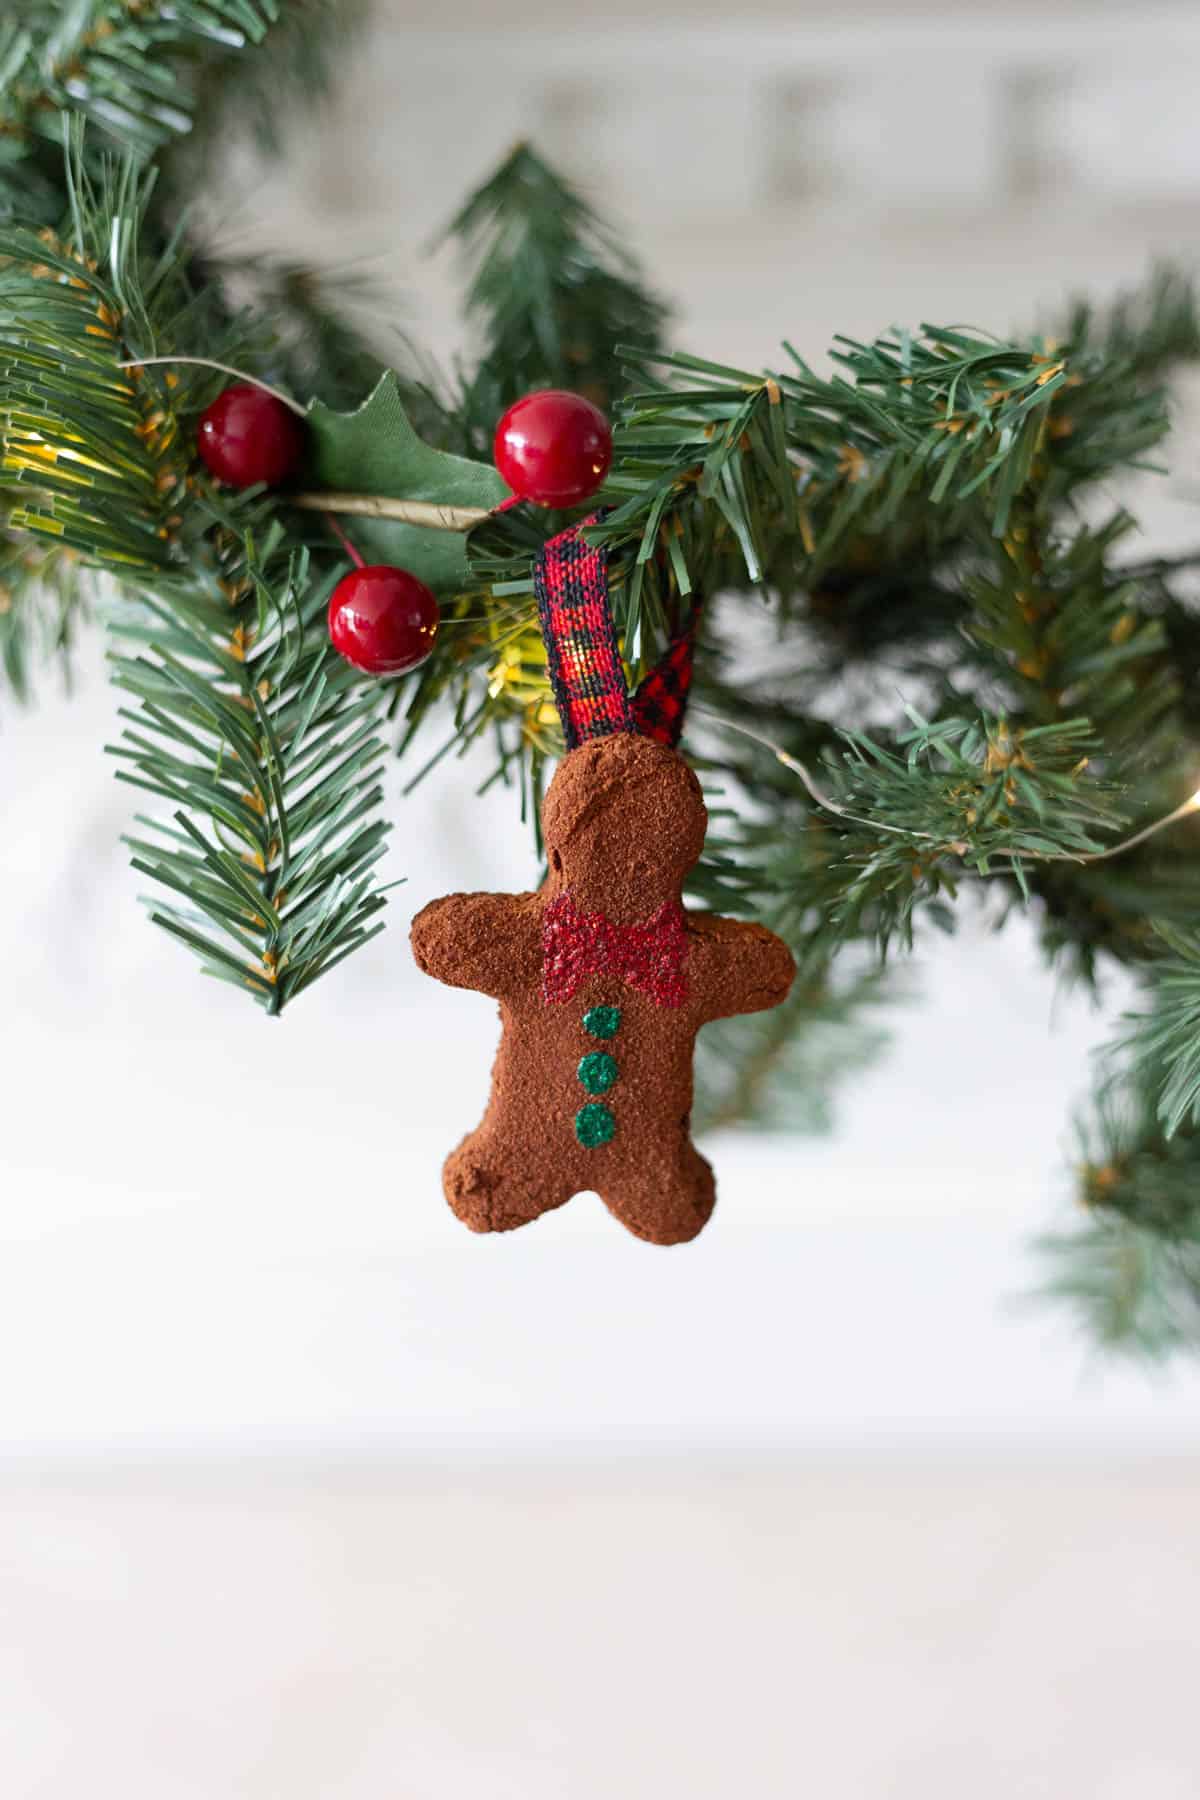 A gingerbread man Cinnamon ornament hanging on a garland